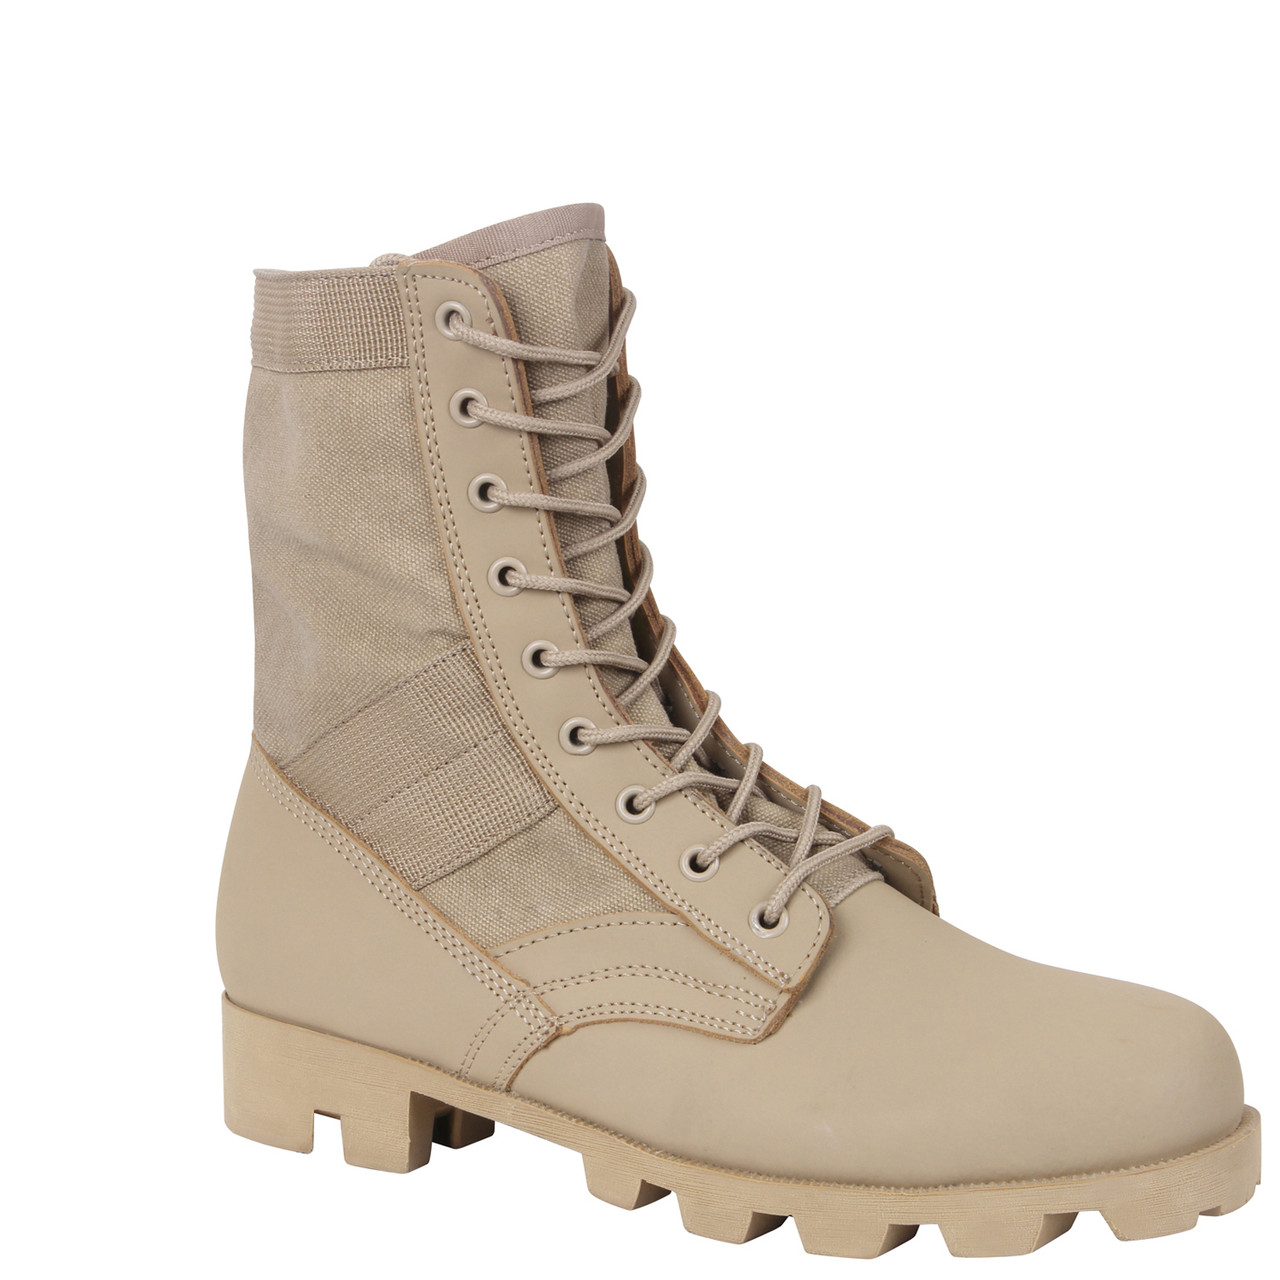 classic military jungle boots